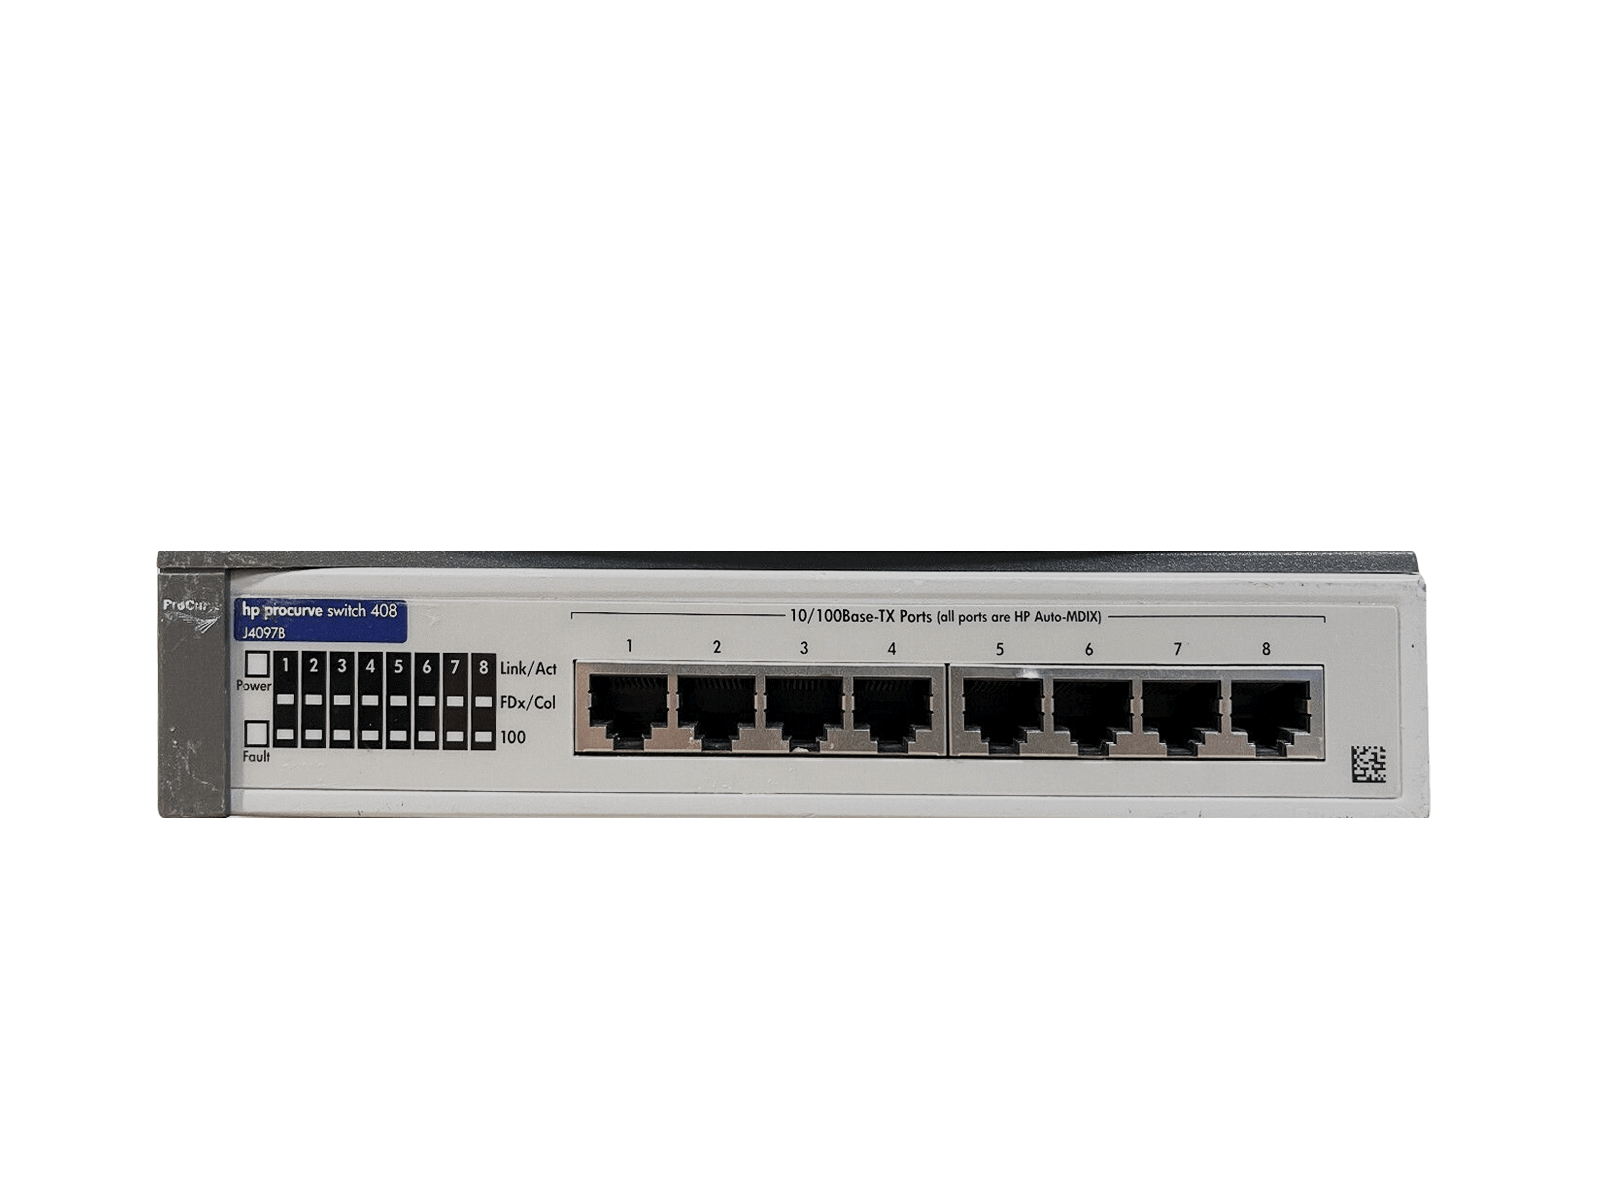 Lot of 4 HP ProCurve Switch 408 8 Port 10/100 RJ45 Fast Ethernet Switch